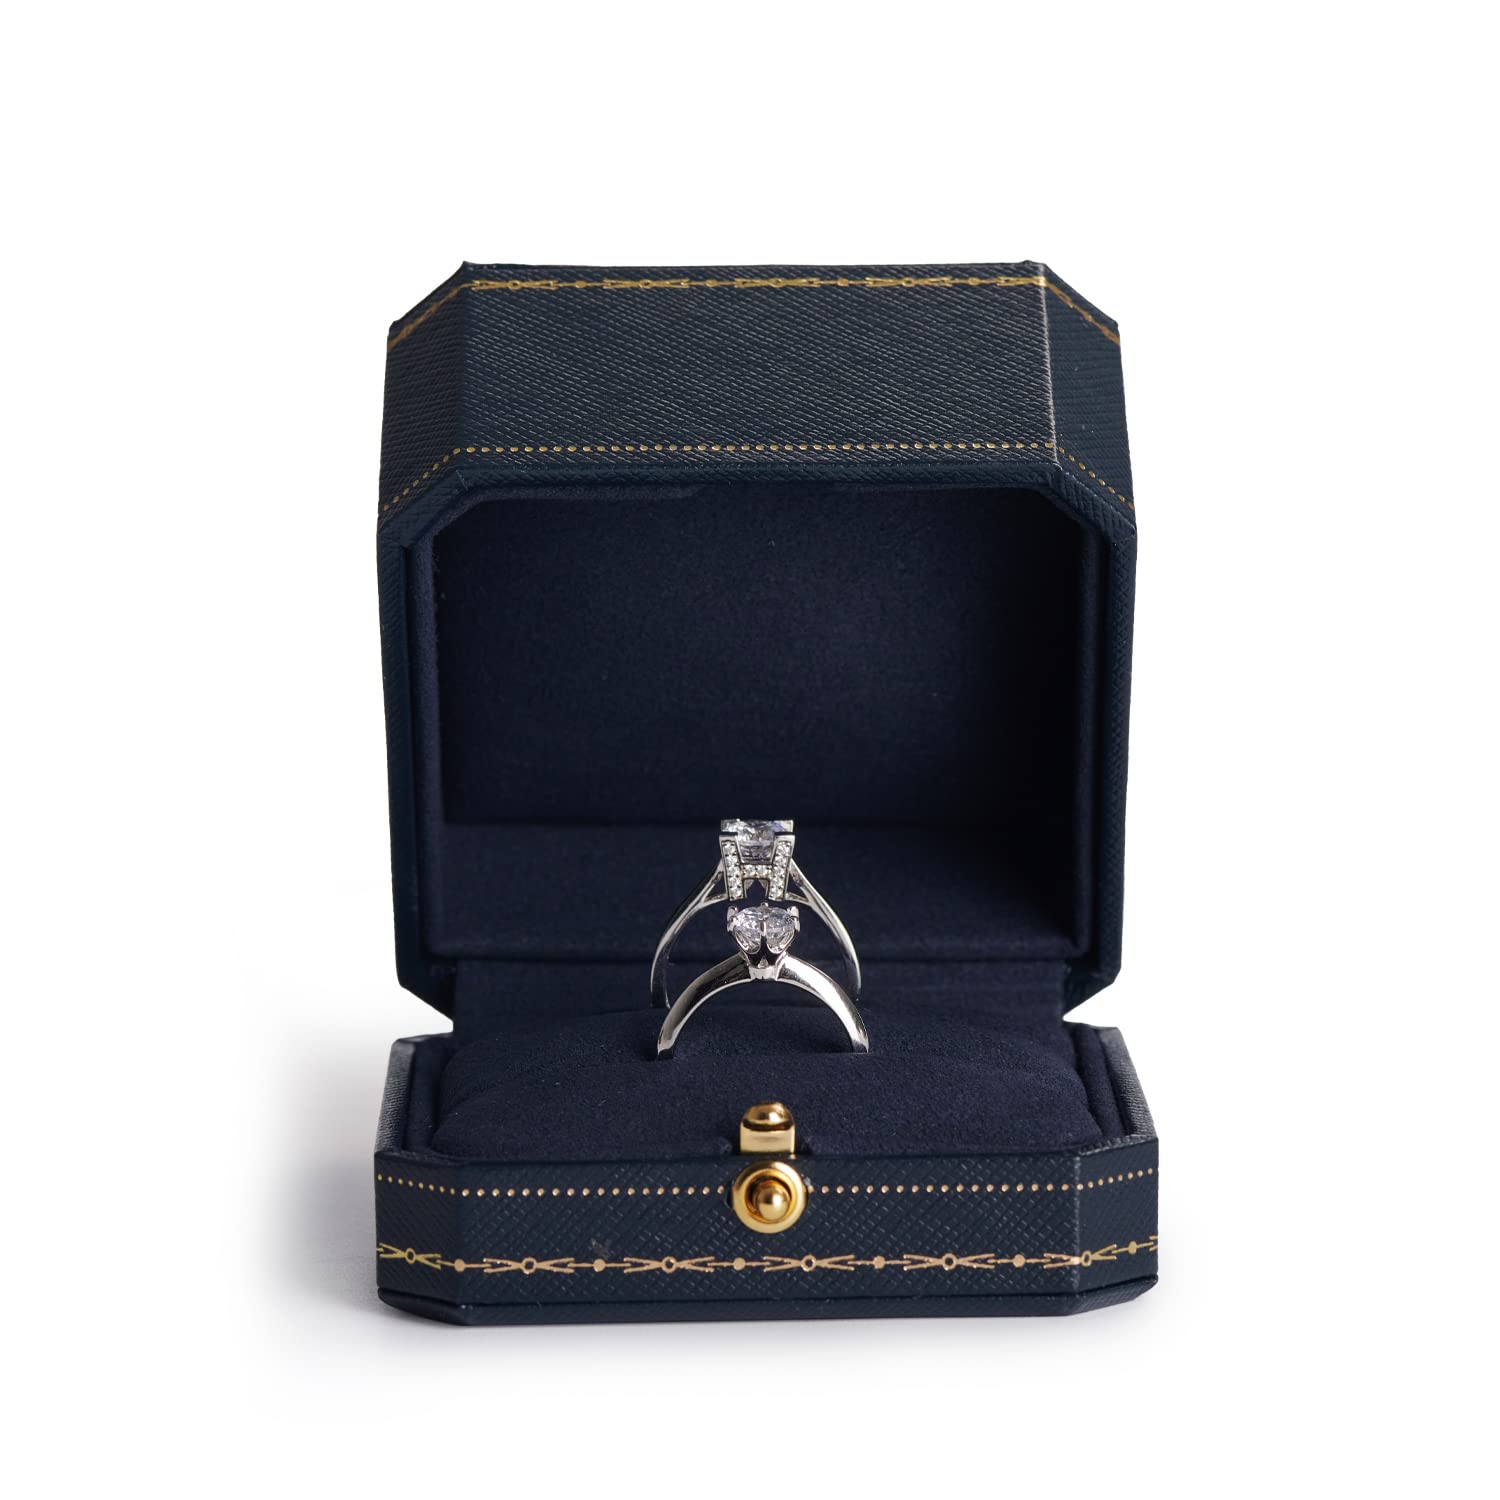 Oirlv 指輪ケース プロポーズ リングケース 2個用 持ち運び ミニ プレゼント 記念日 結婚などに適当 ジュエリー収納 H13102 (ブルー)